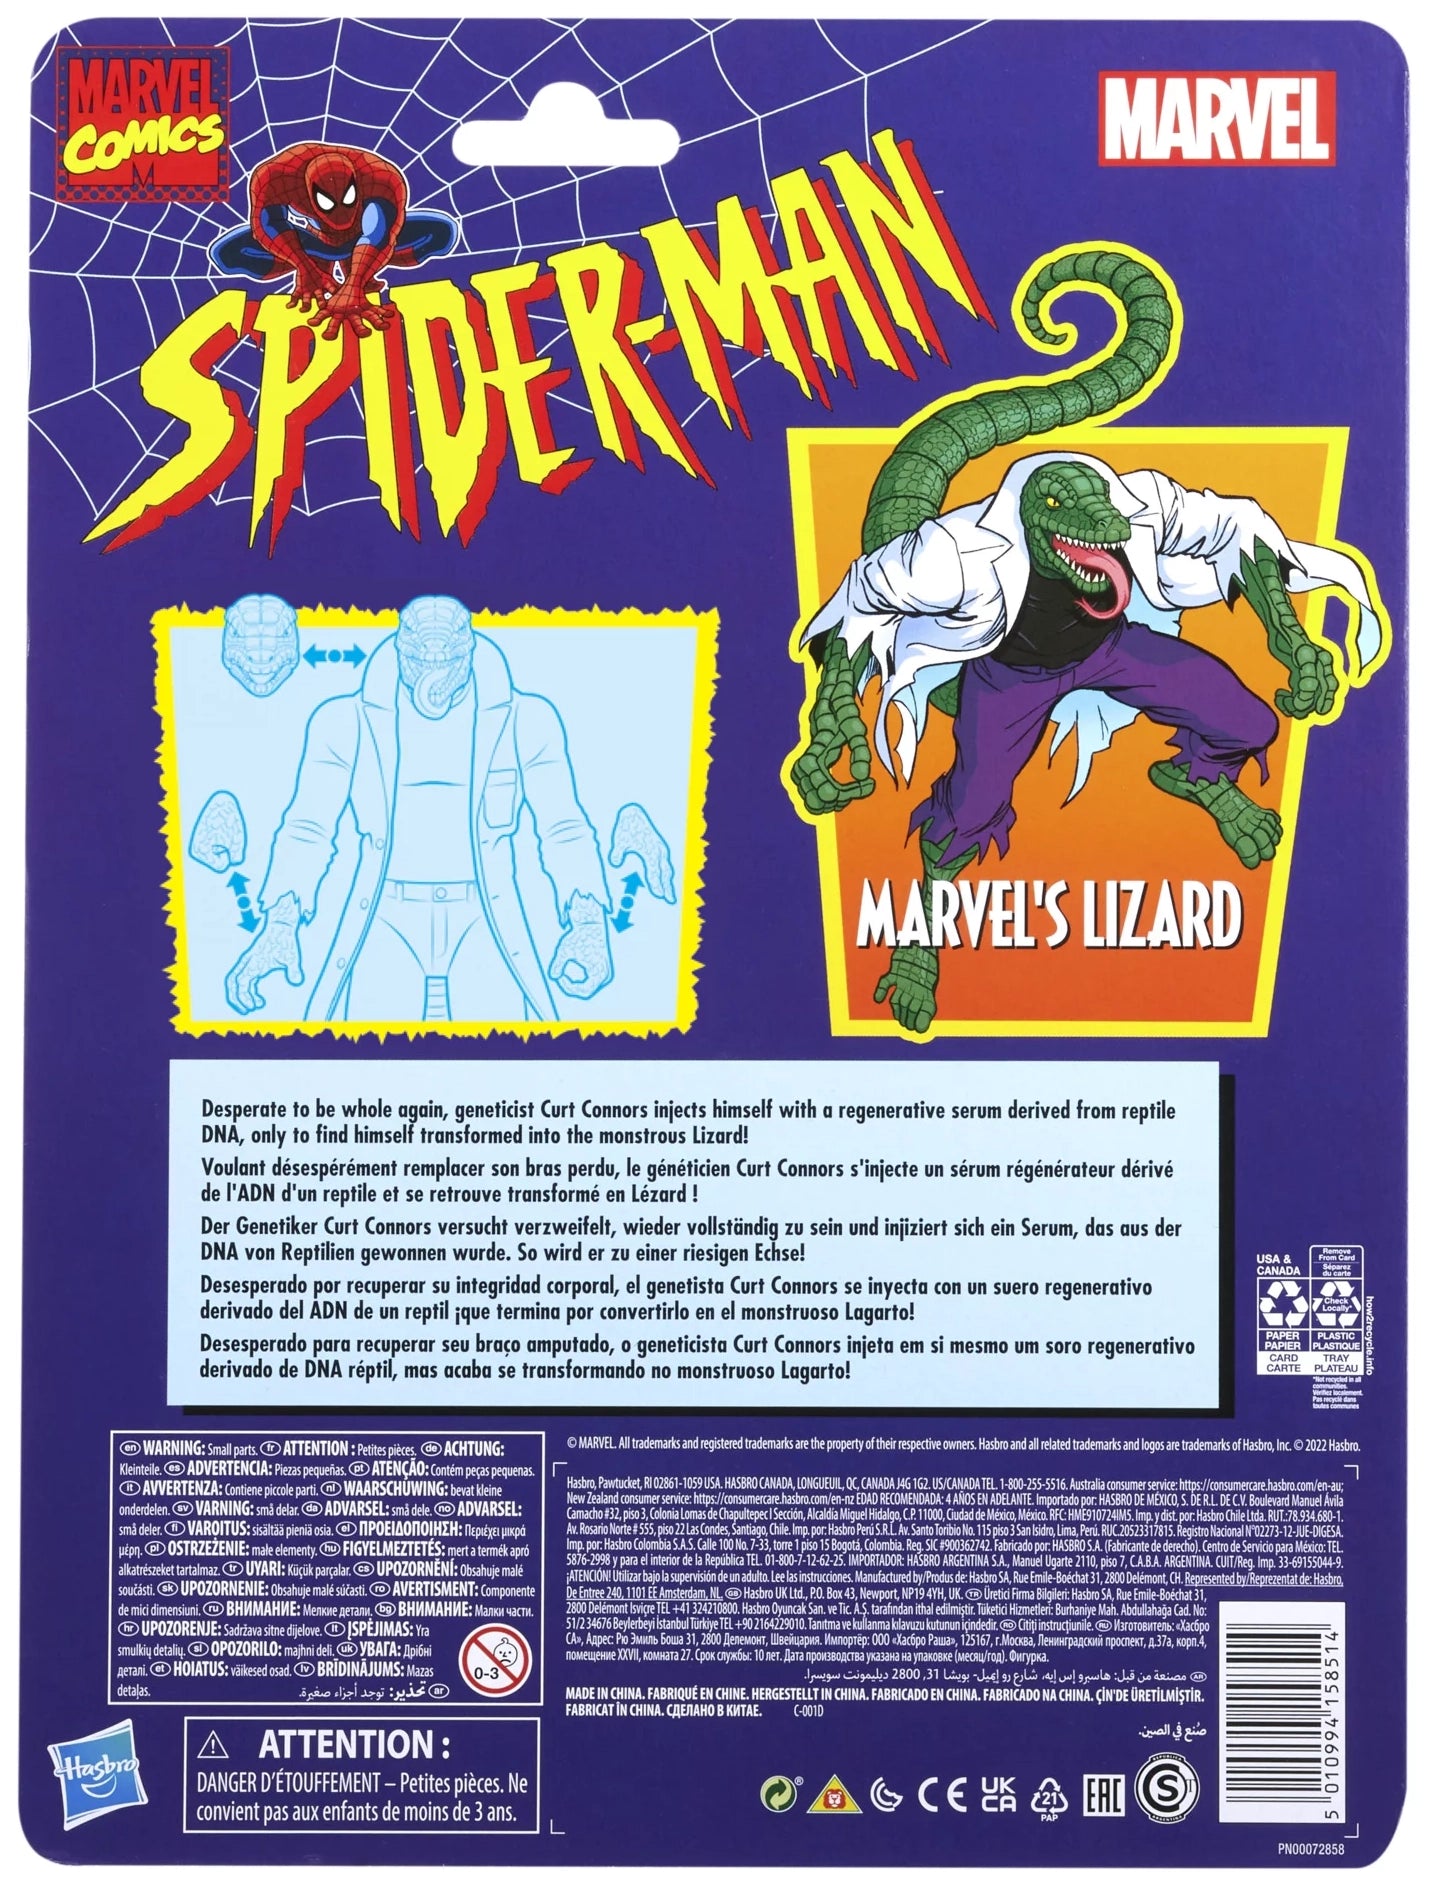 Marvel Legends Series Spider-Man 6-inch Marvel’s Lizard Retro Action Figure